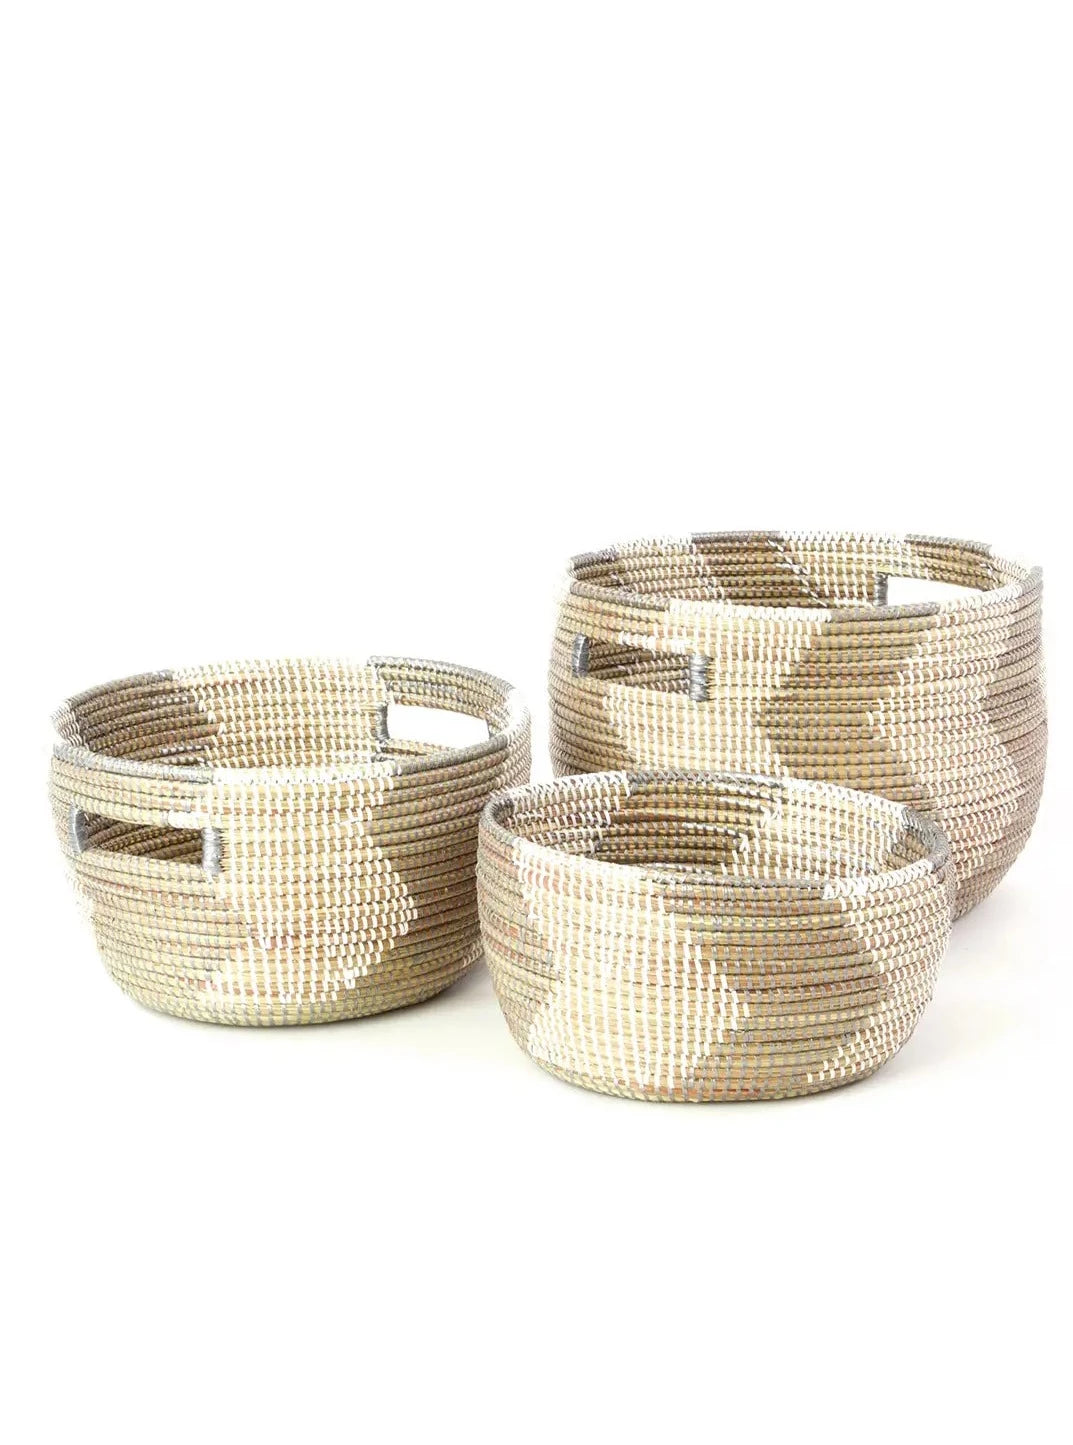 Silver and White ZigZag Nesting Baskets - 3 sizes